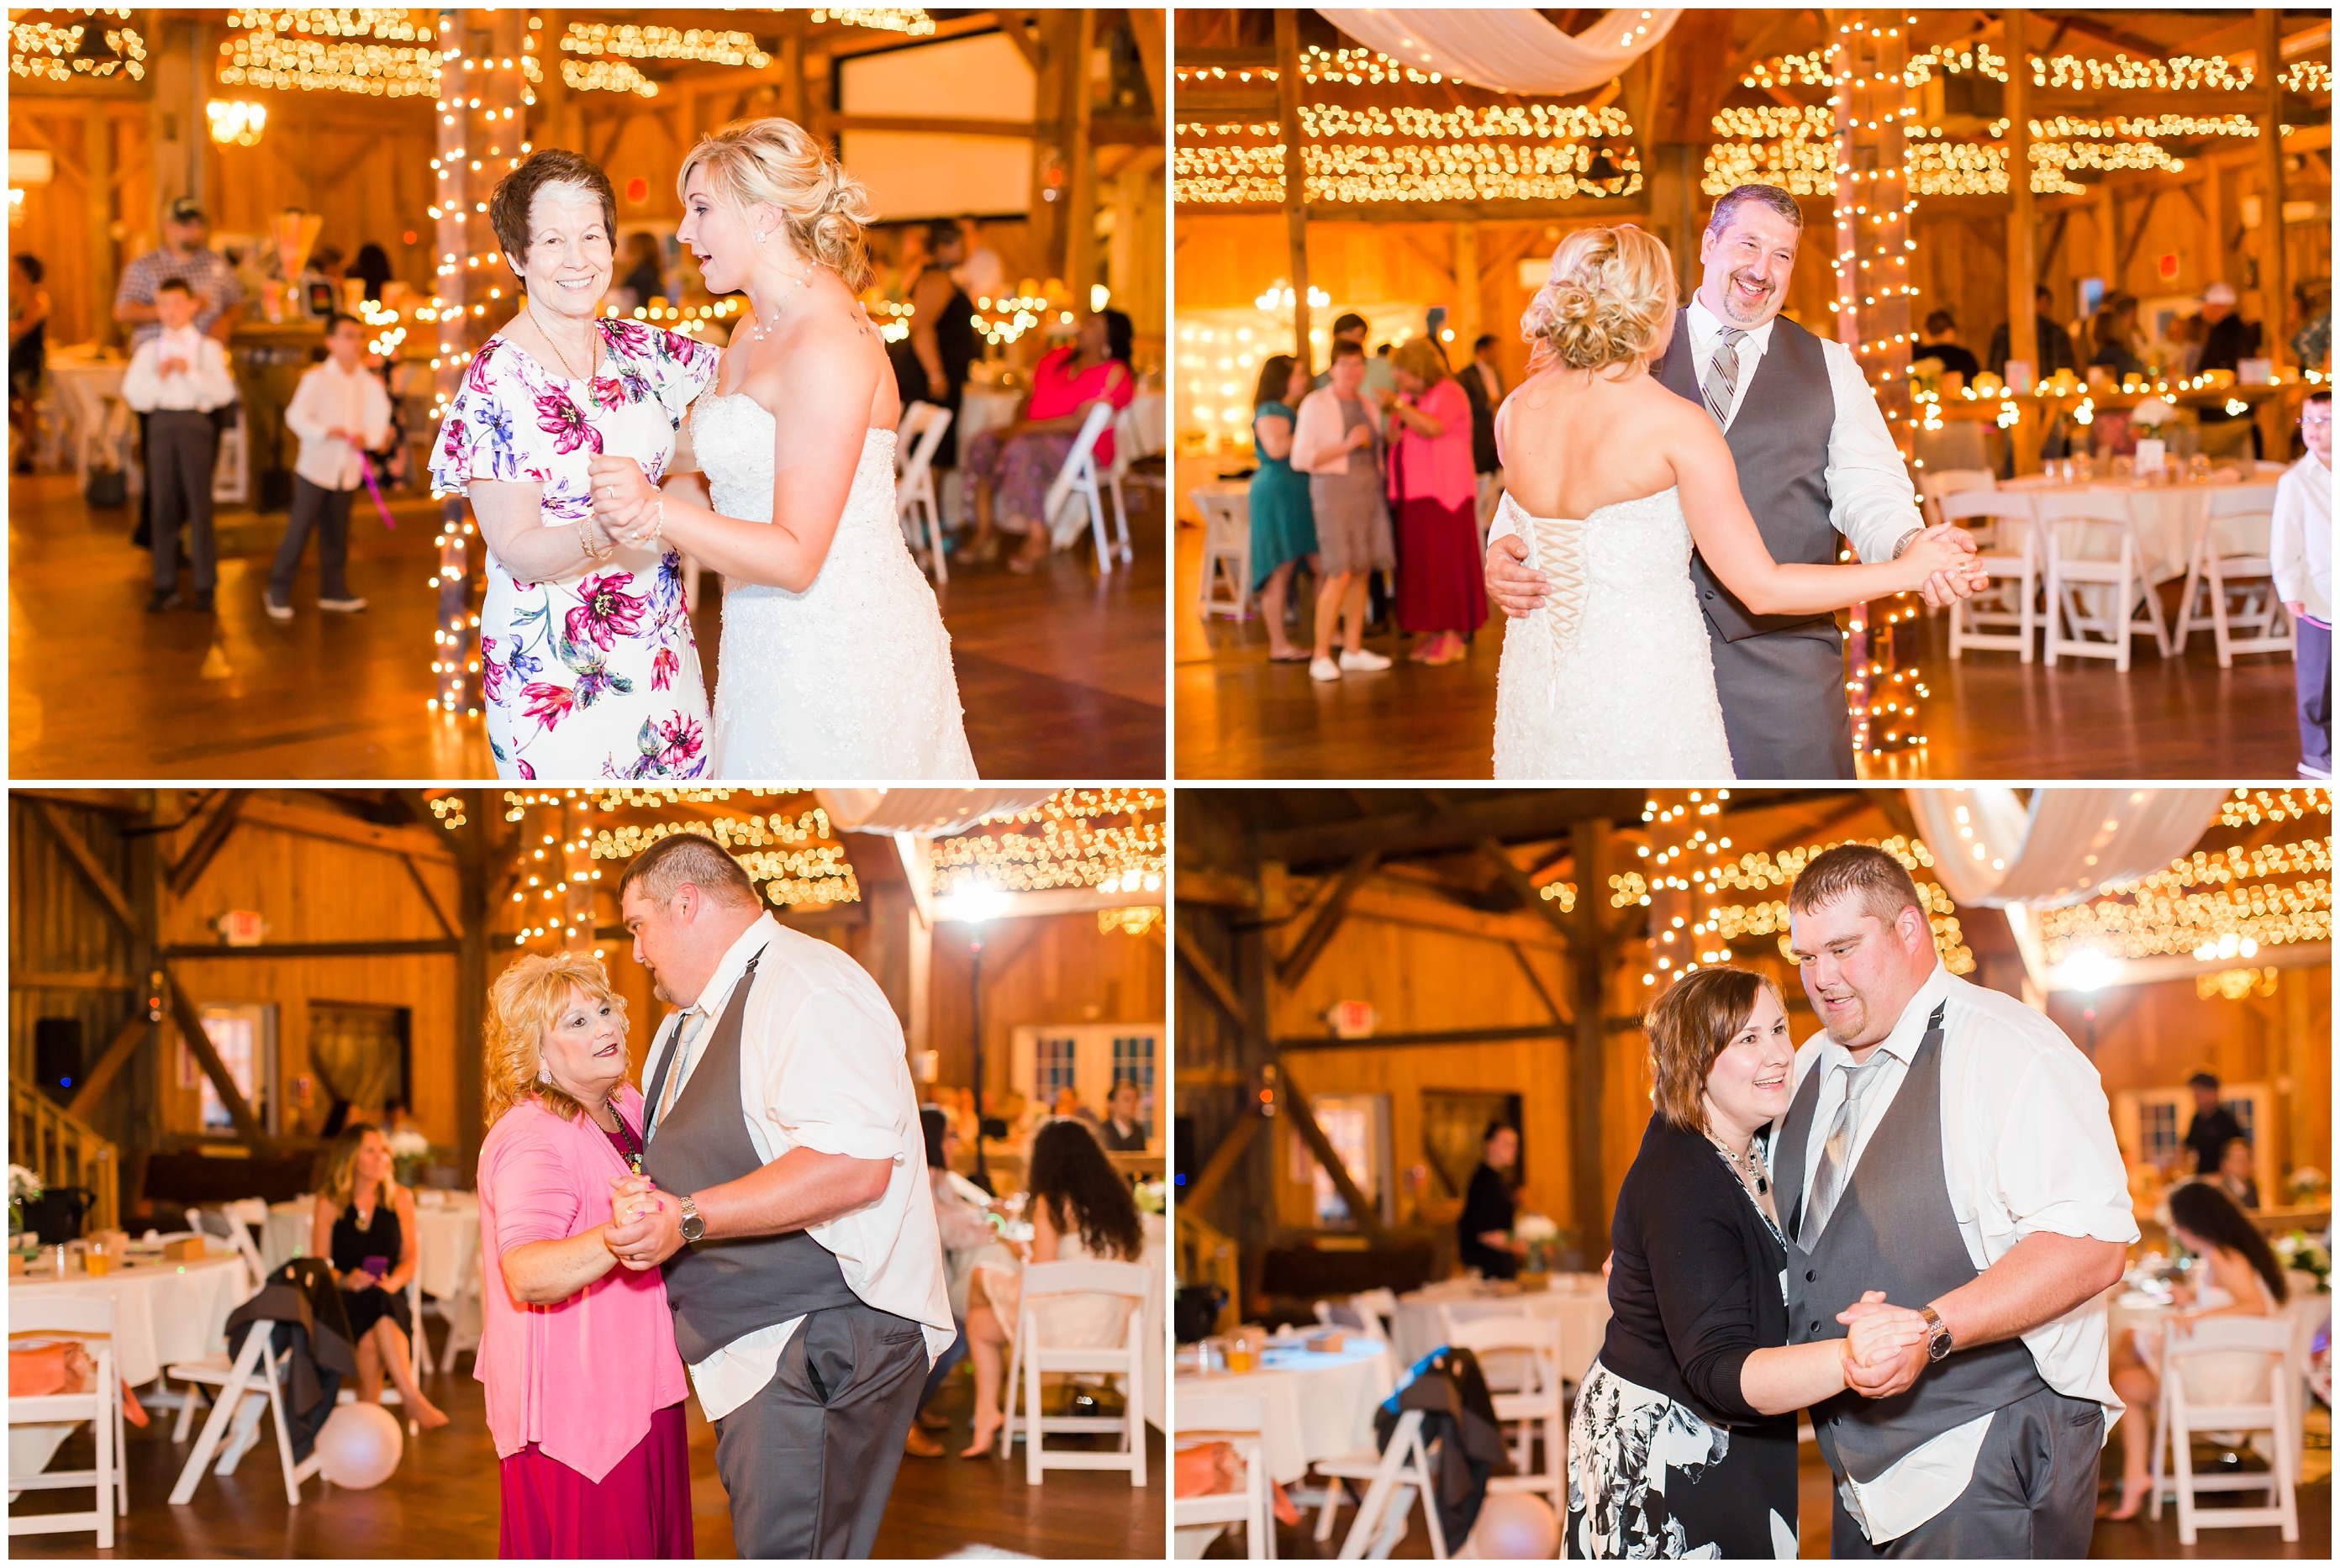 Brookside Farm Spring Wedding,Loren Jackson Photography,Photograph Akron Ohio,cleveland wedding photography,rustic wedding,